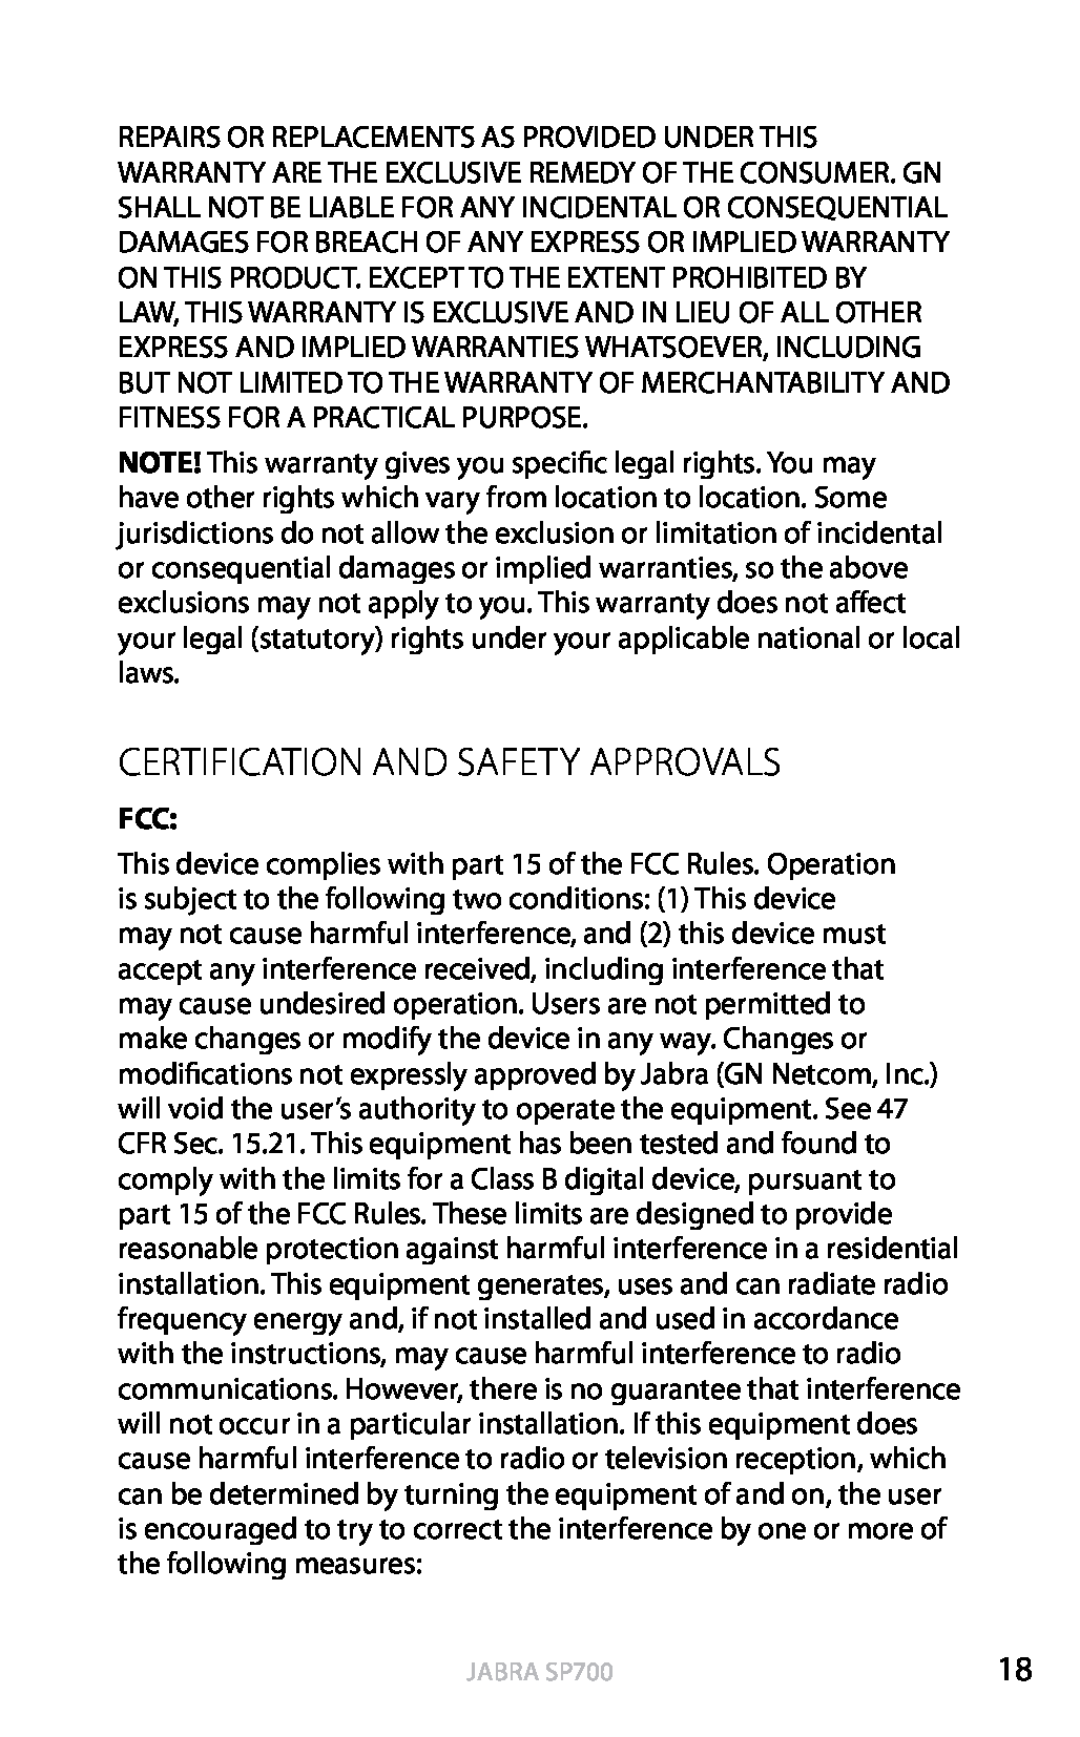 Jabra user manual Certification and safety approvals, english, Jabra SP700 